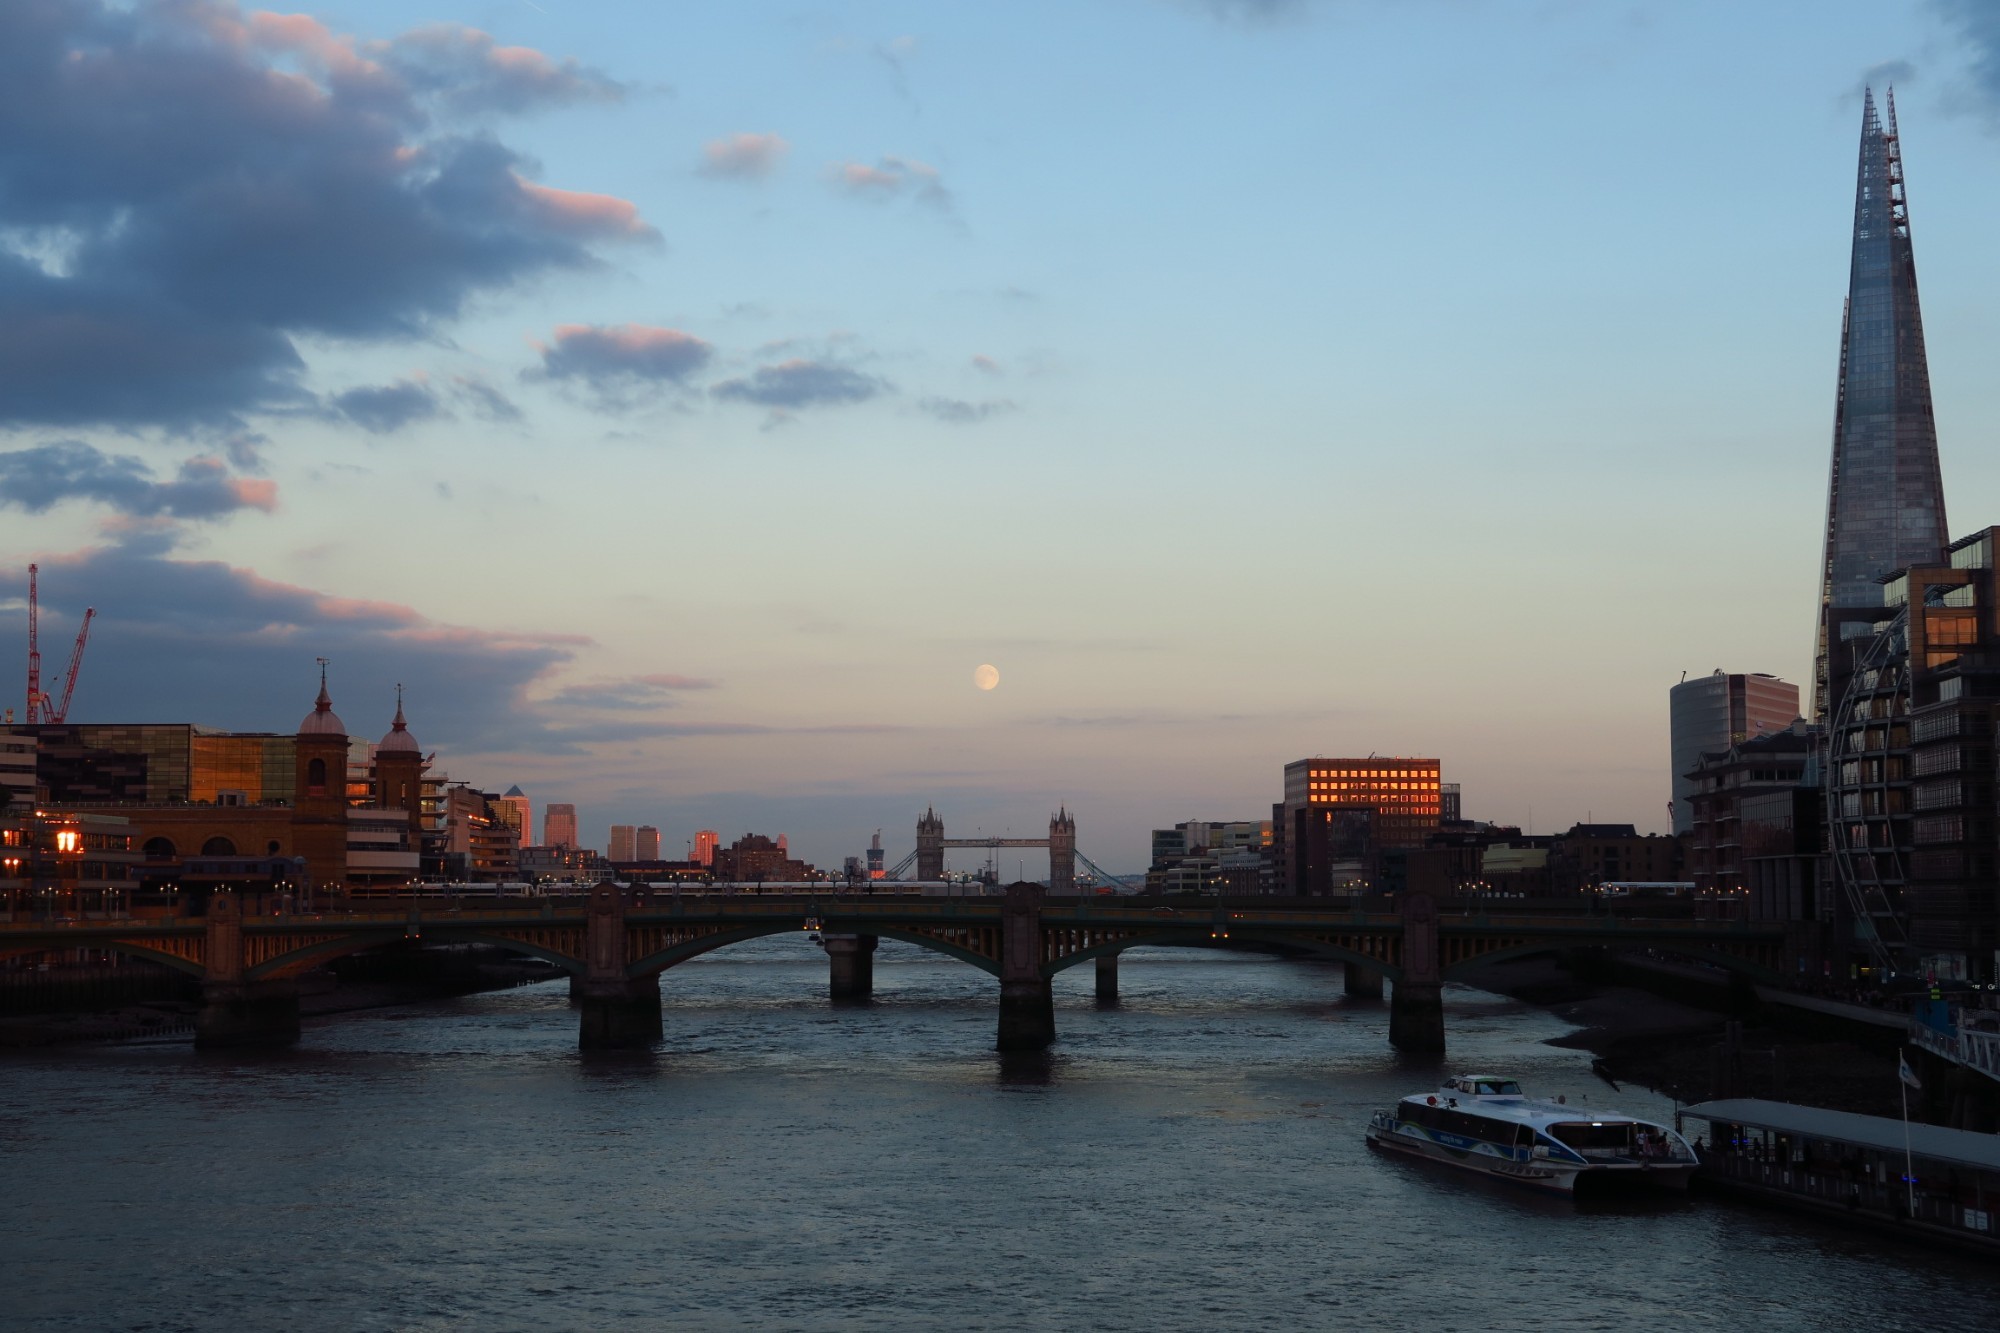 View from the Millenium bridge in London